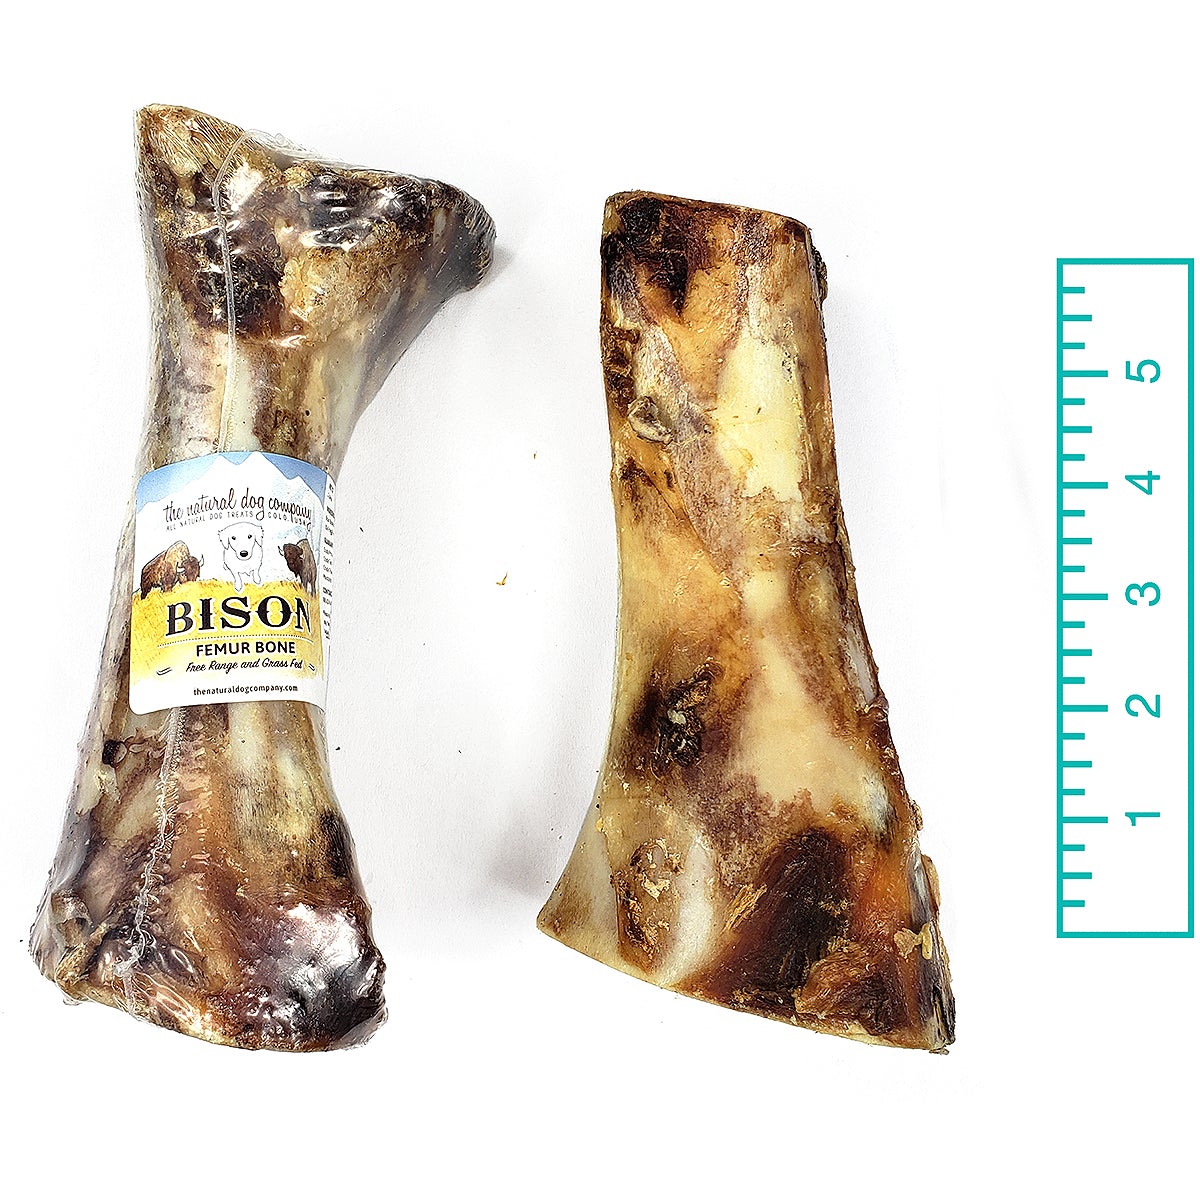 Tuesday's Natural Dog Company Bison Femur Bone Dog Treat